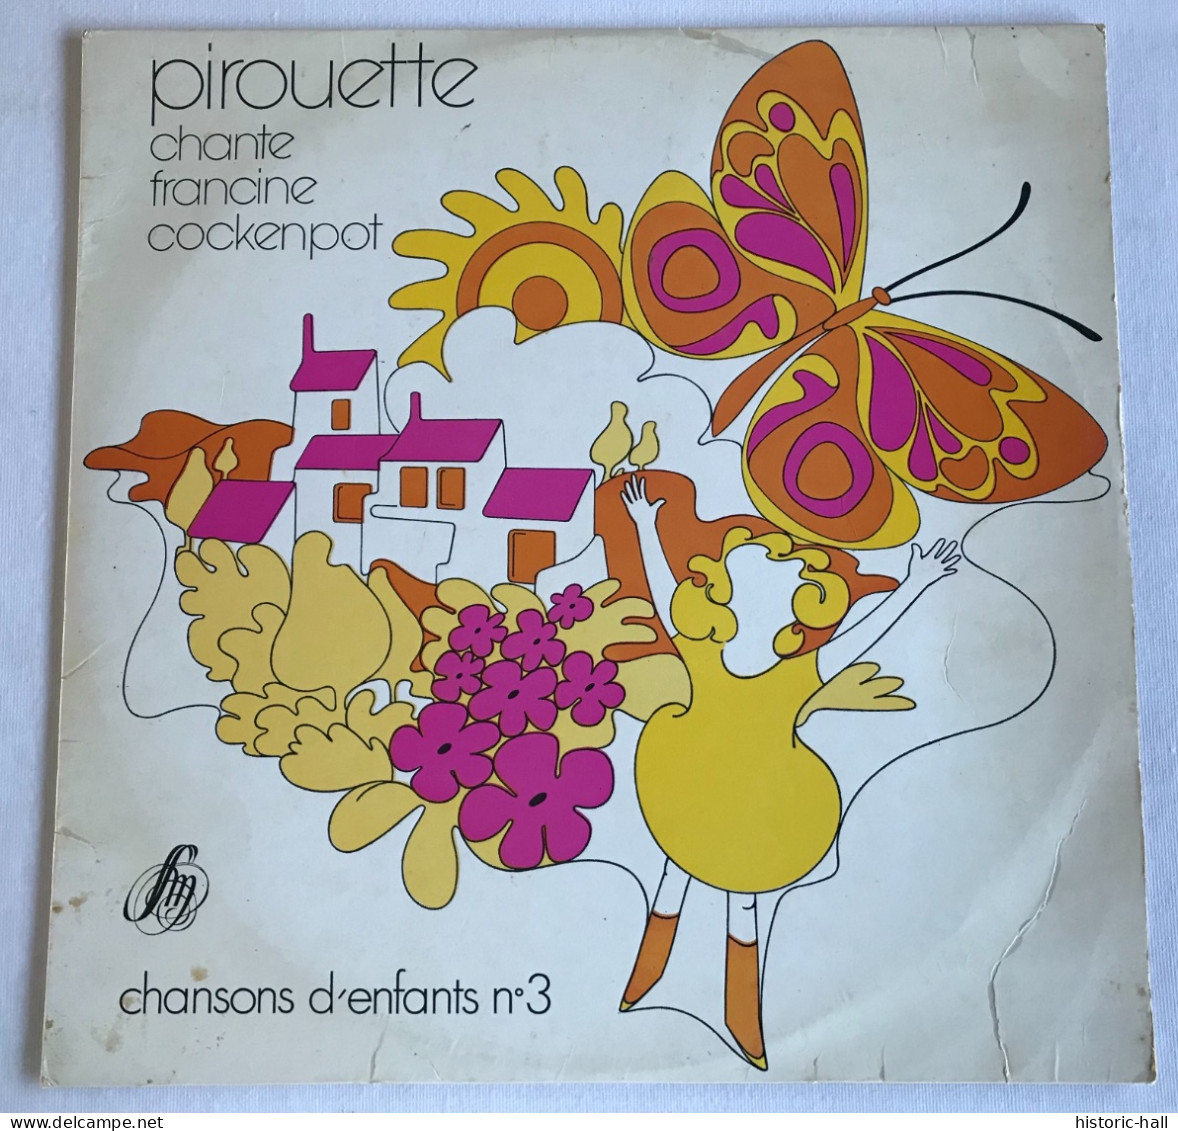 PIROUETTE - Chante Francine Cockenpot - LP - 1972 - French Press - Children